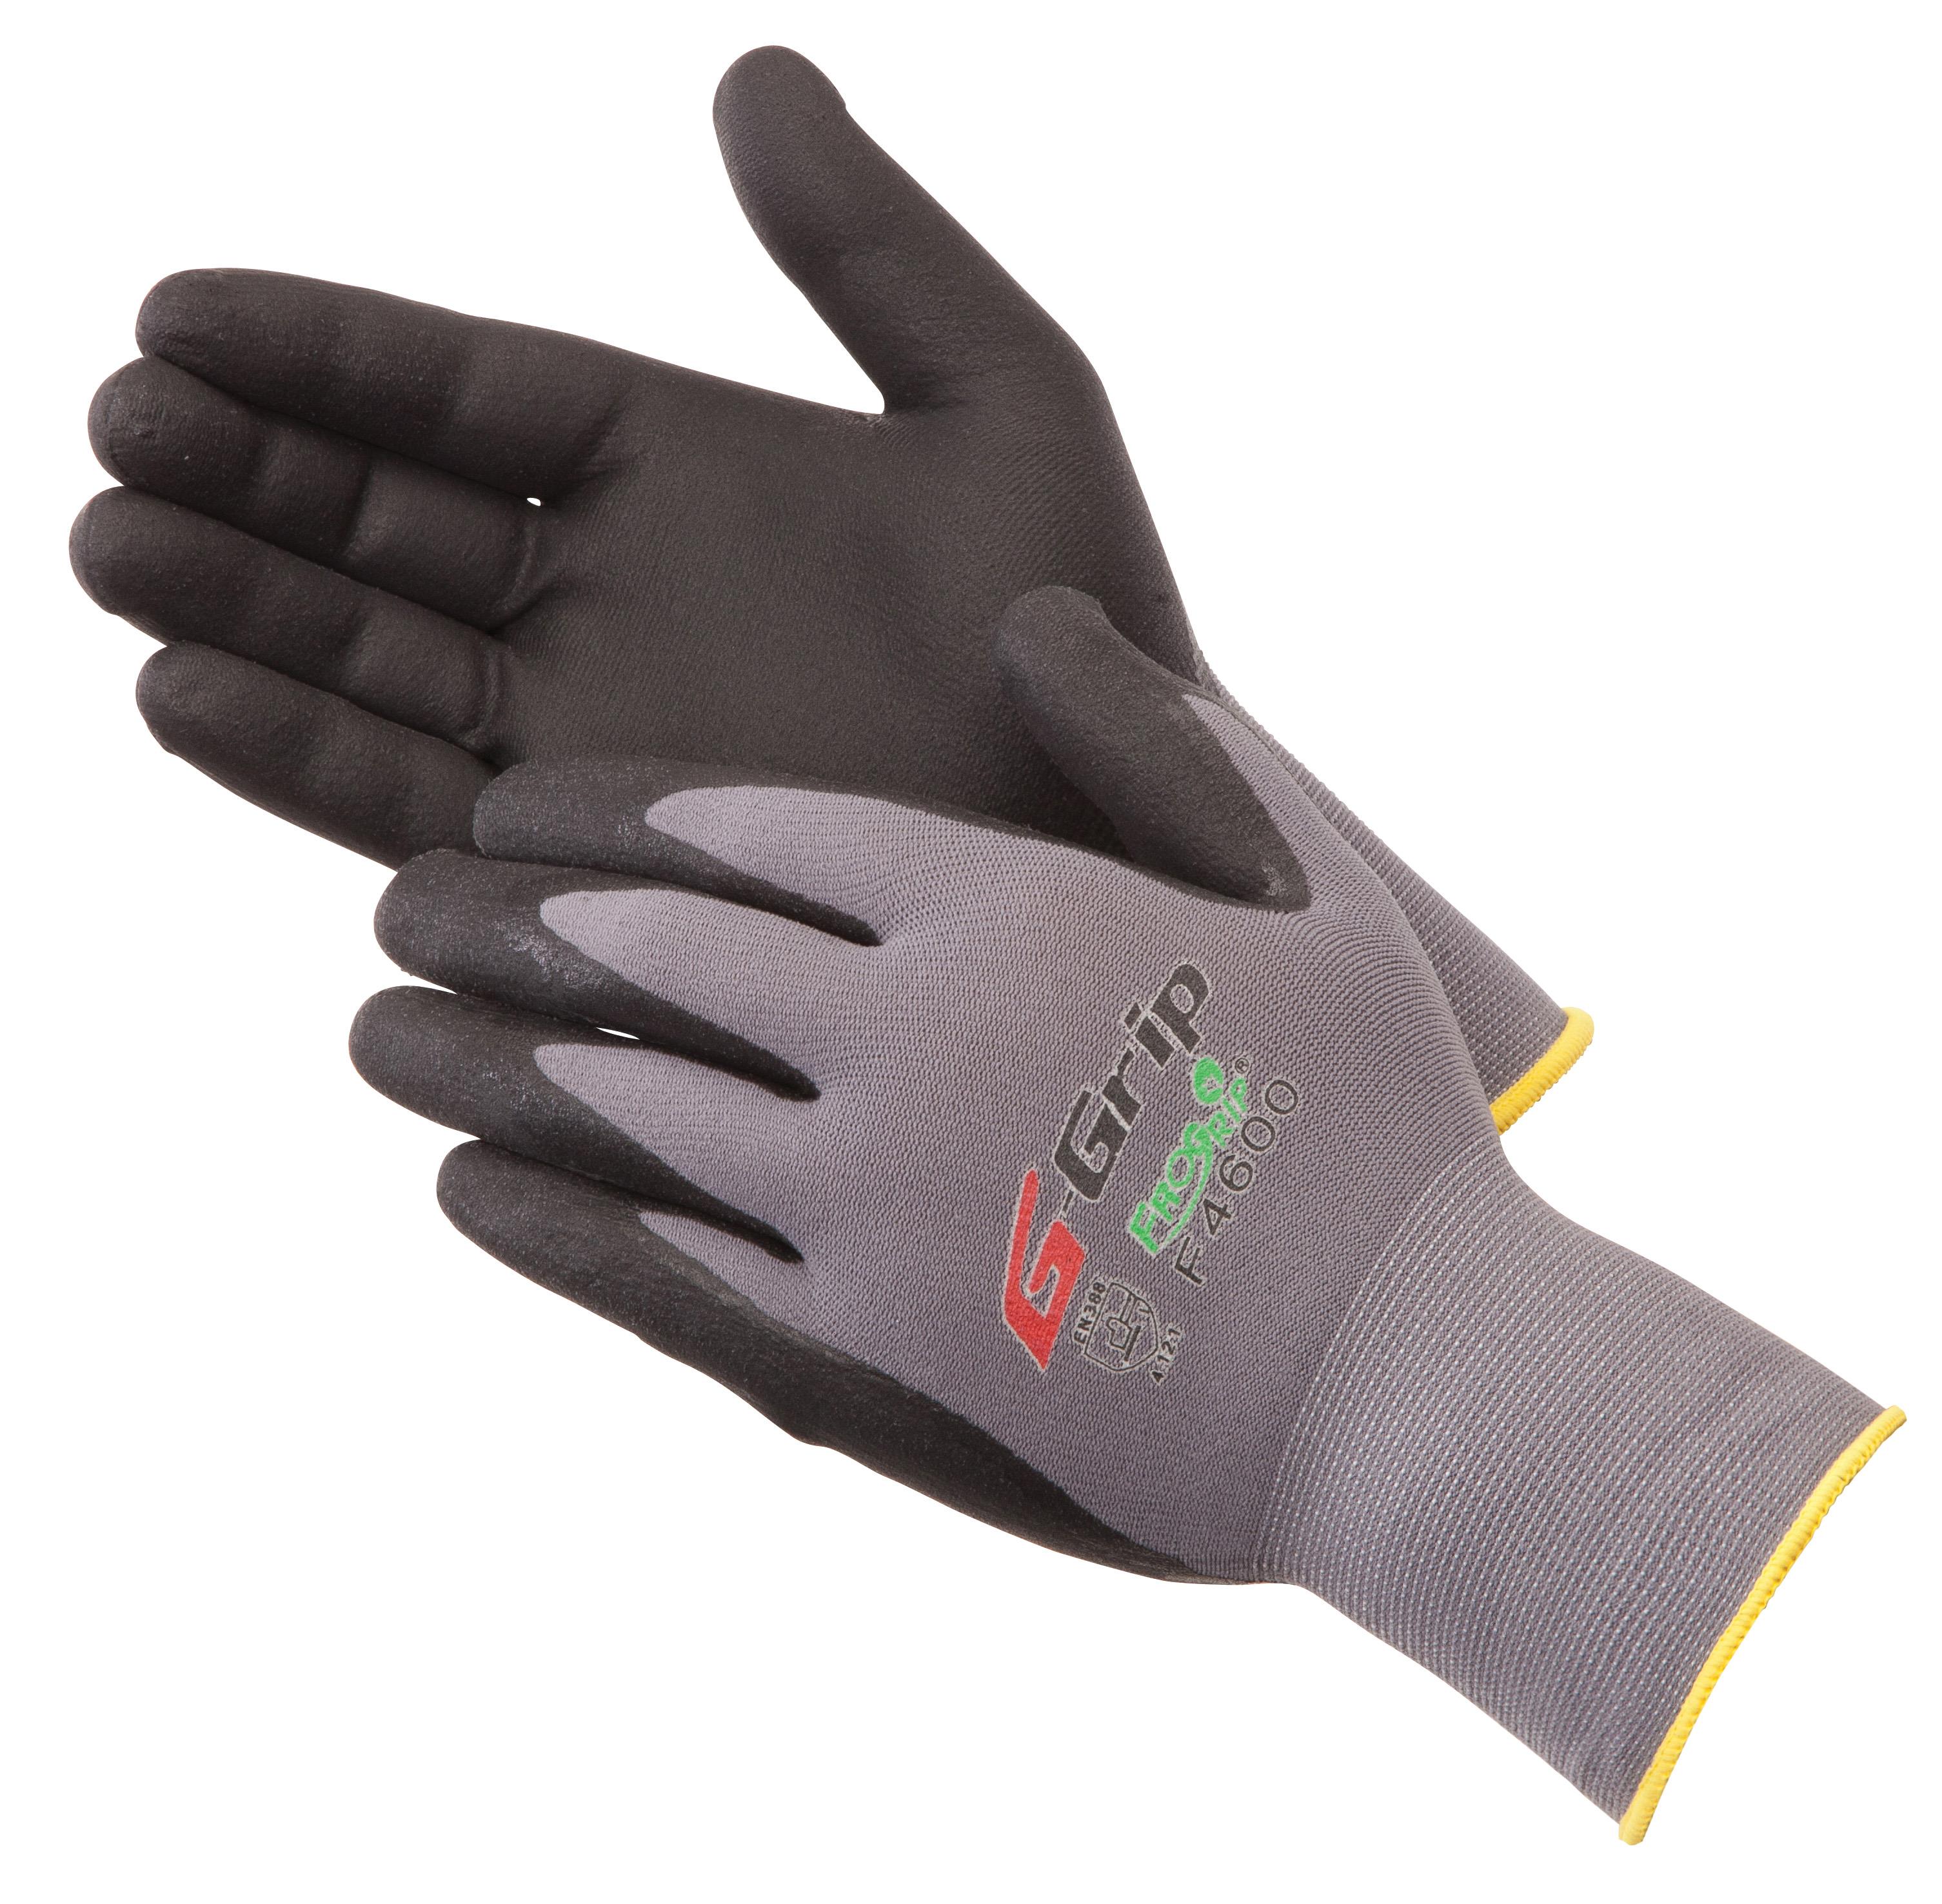 G-GRIP BLACK MICROFINISH NITRILE PALM - Nitrile Coated Gloves